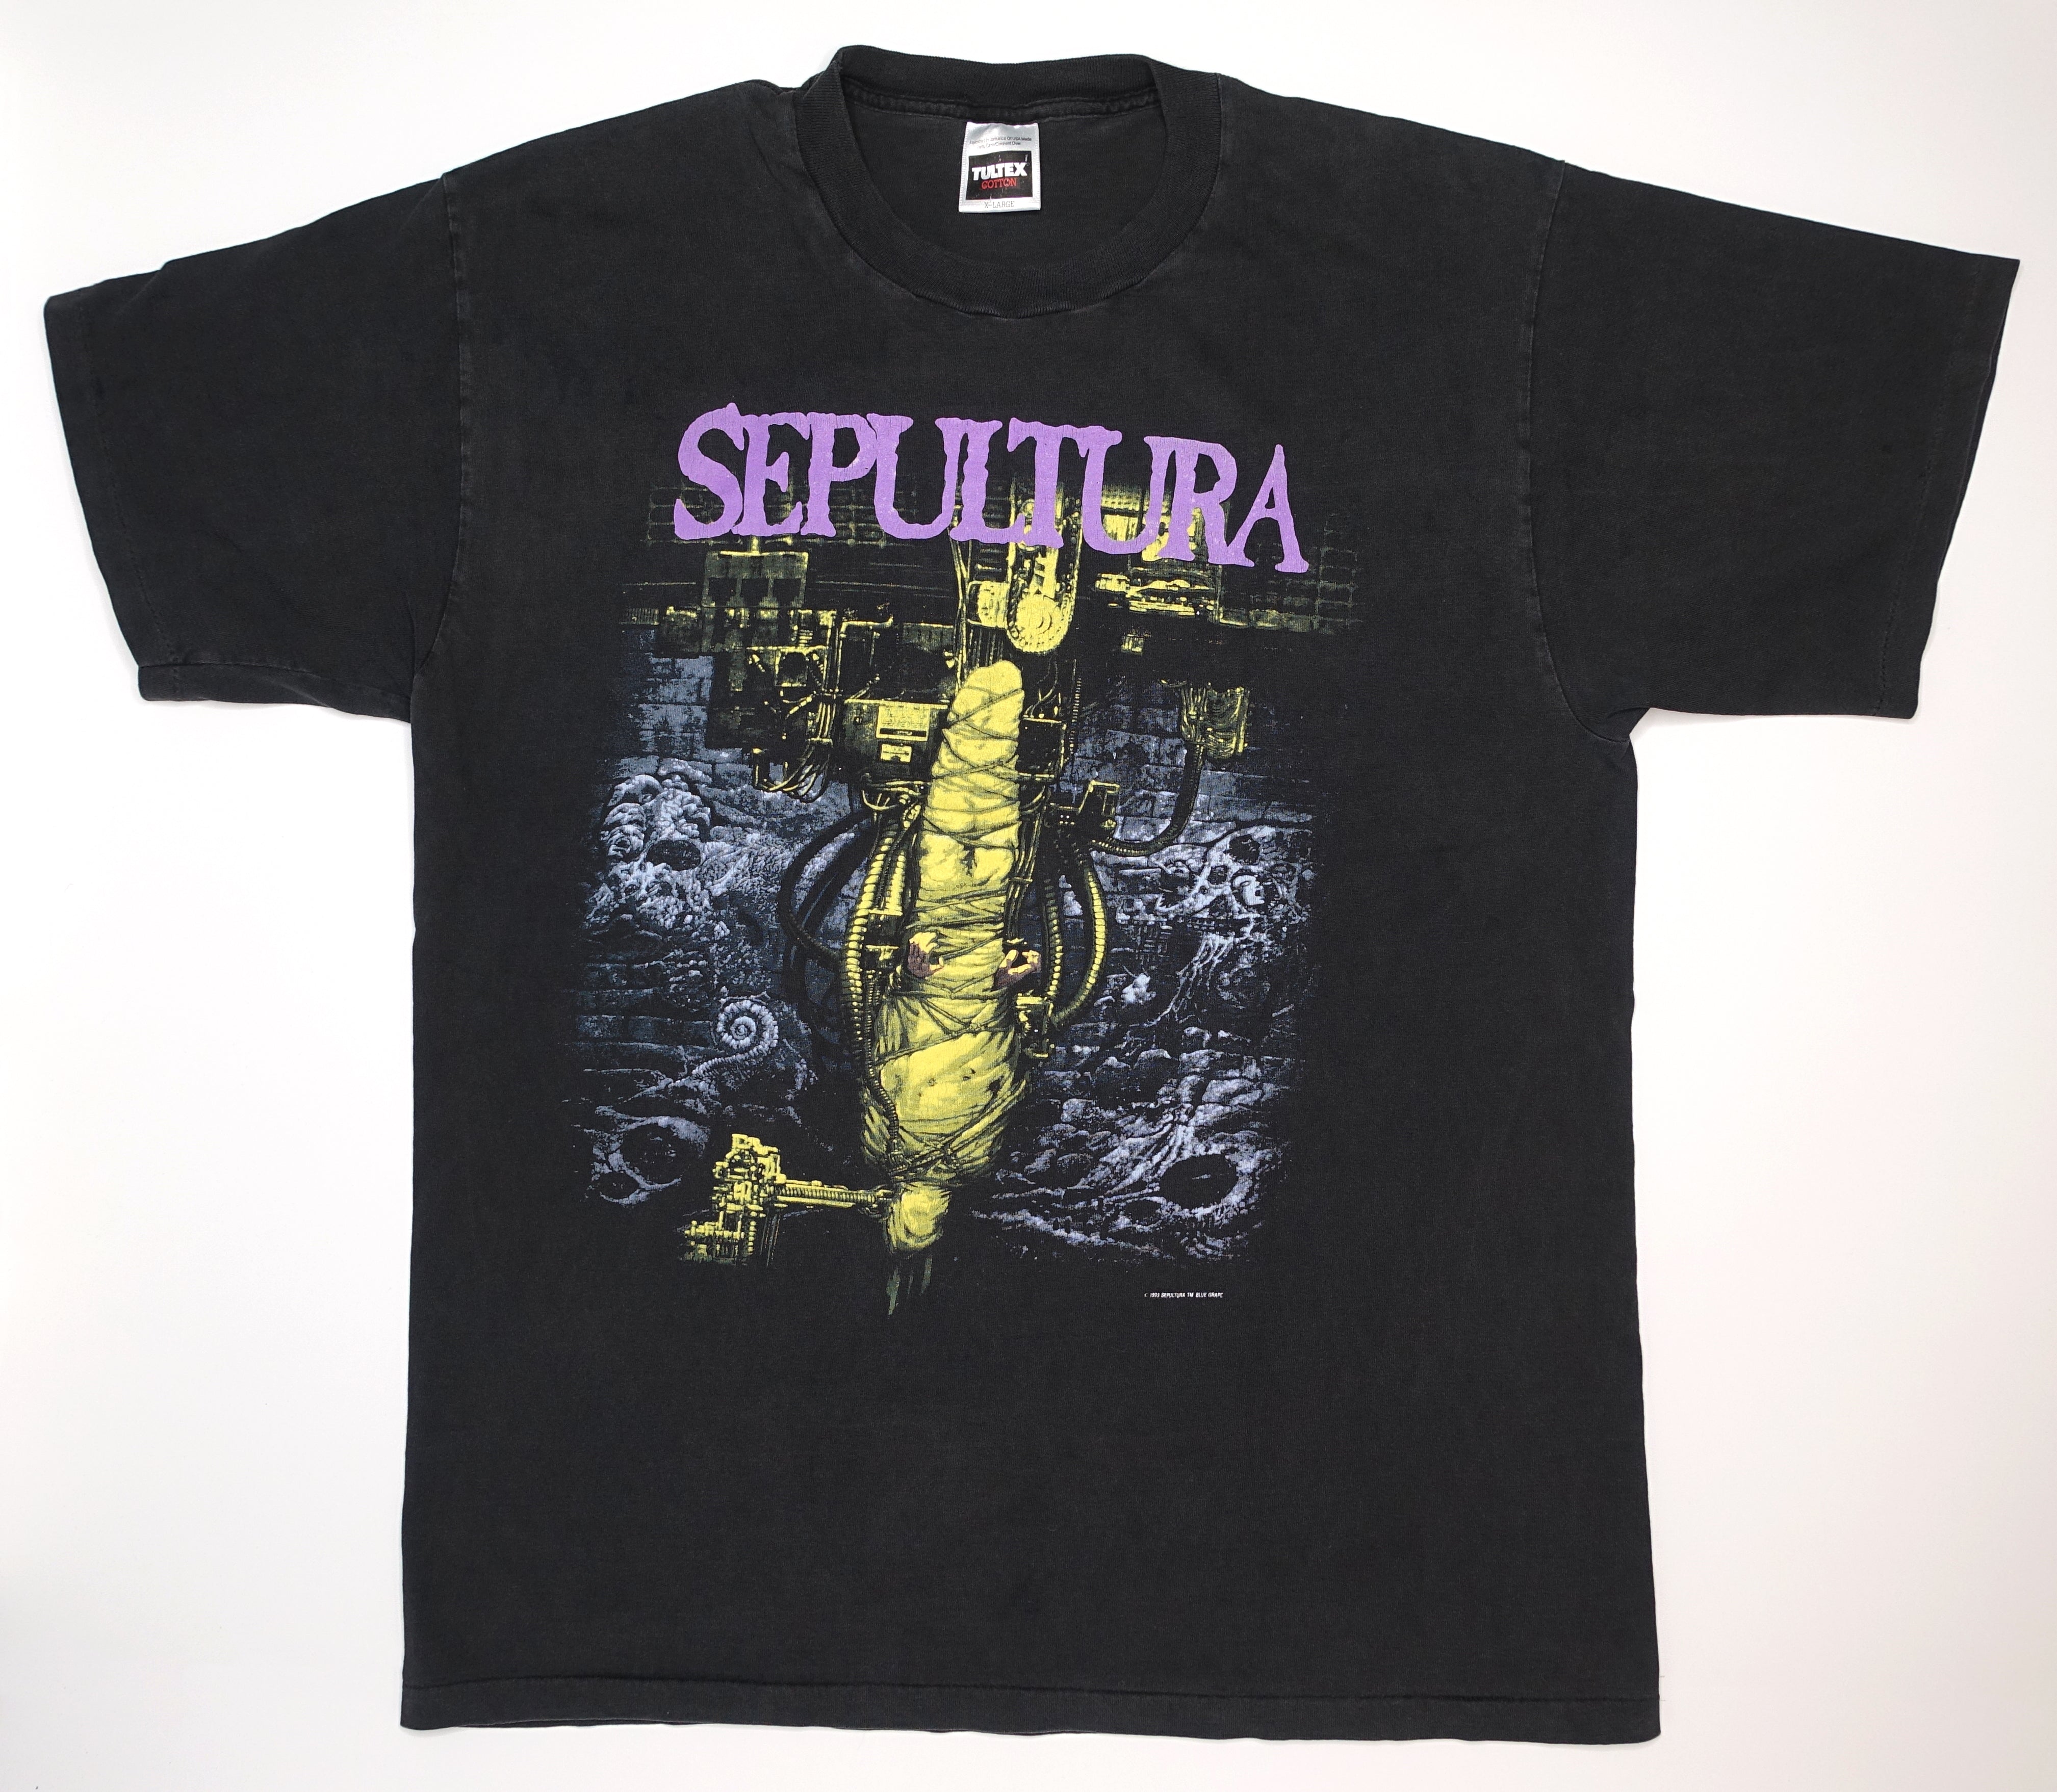 Sepultura - Chaos A.D. 1994 North American Tour Shirt Size XL